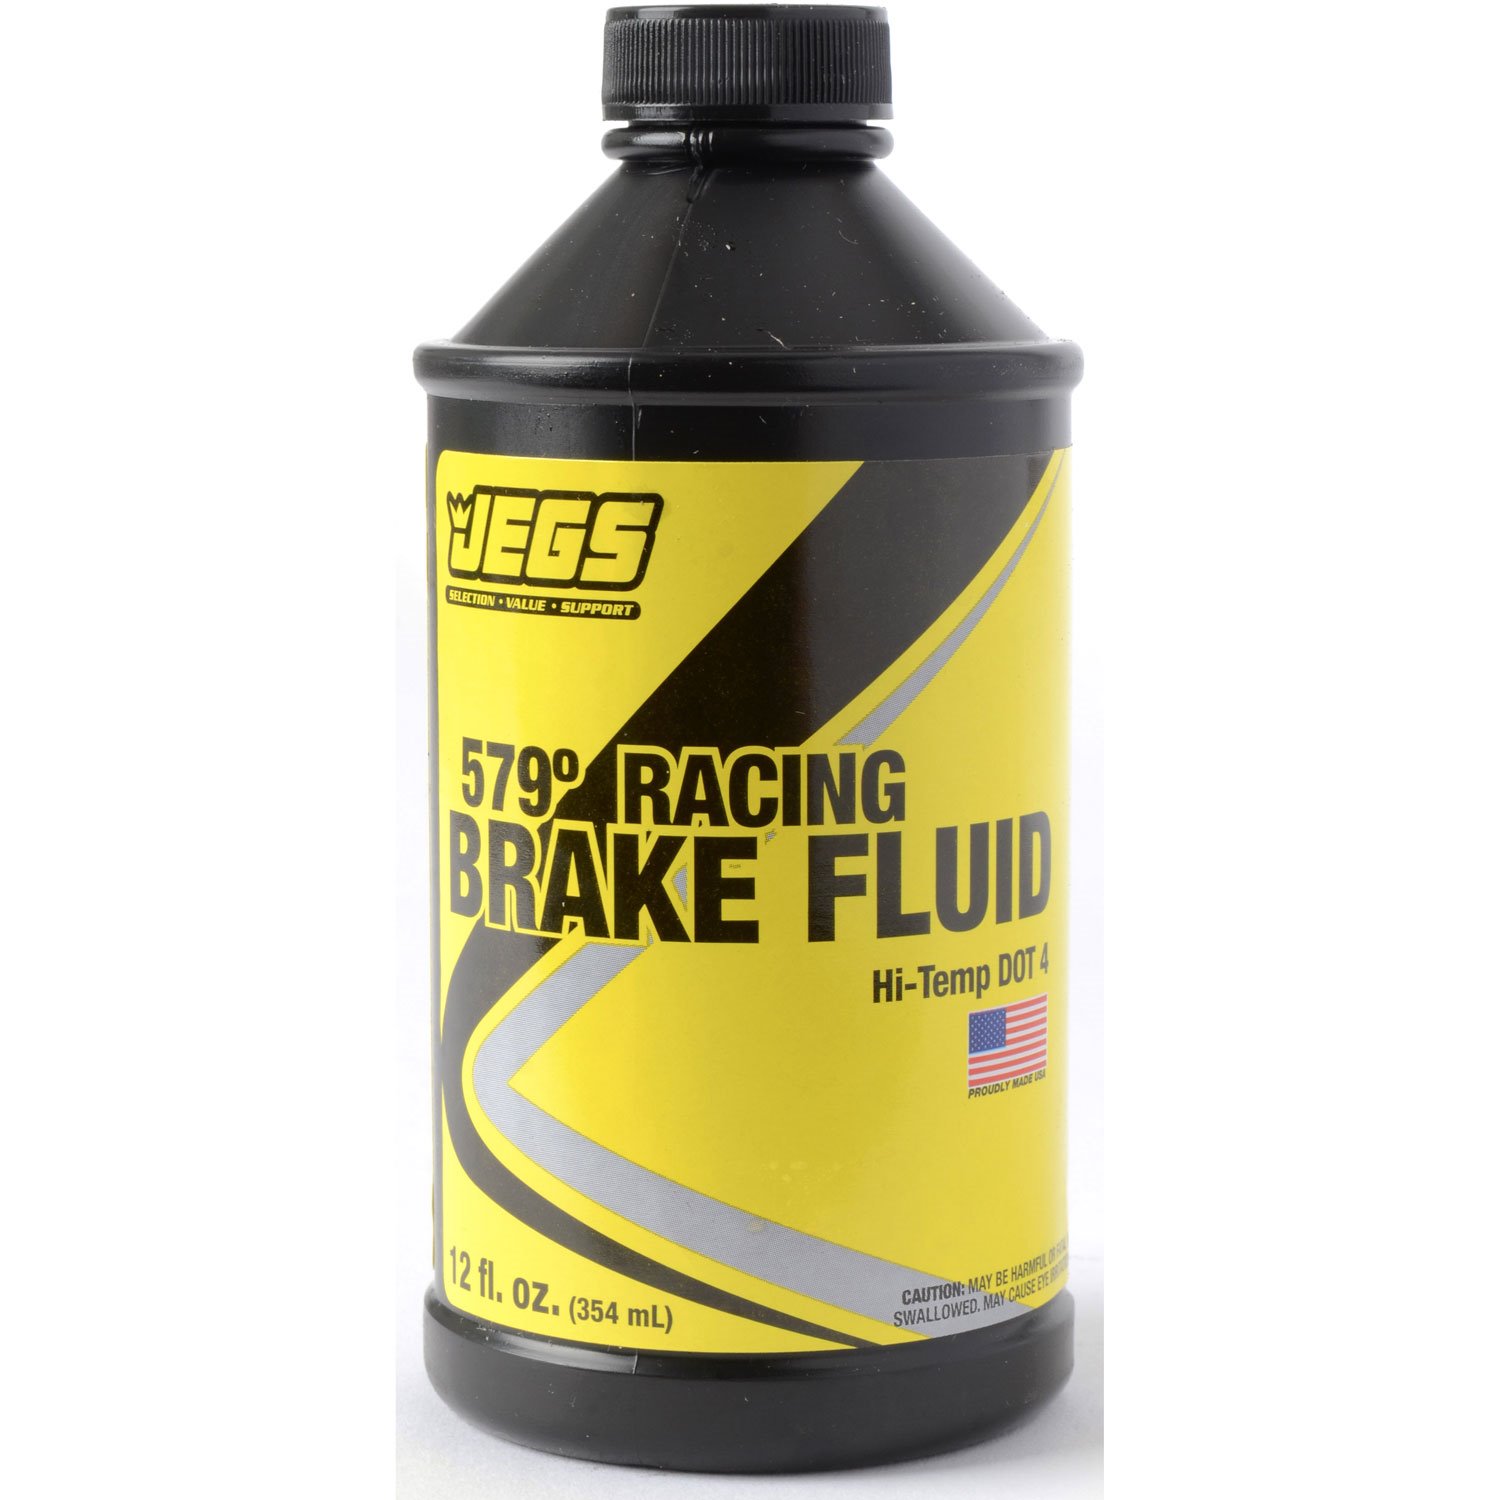 Racing Brake Fluid 579 degree [12 oz. bottle]